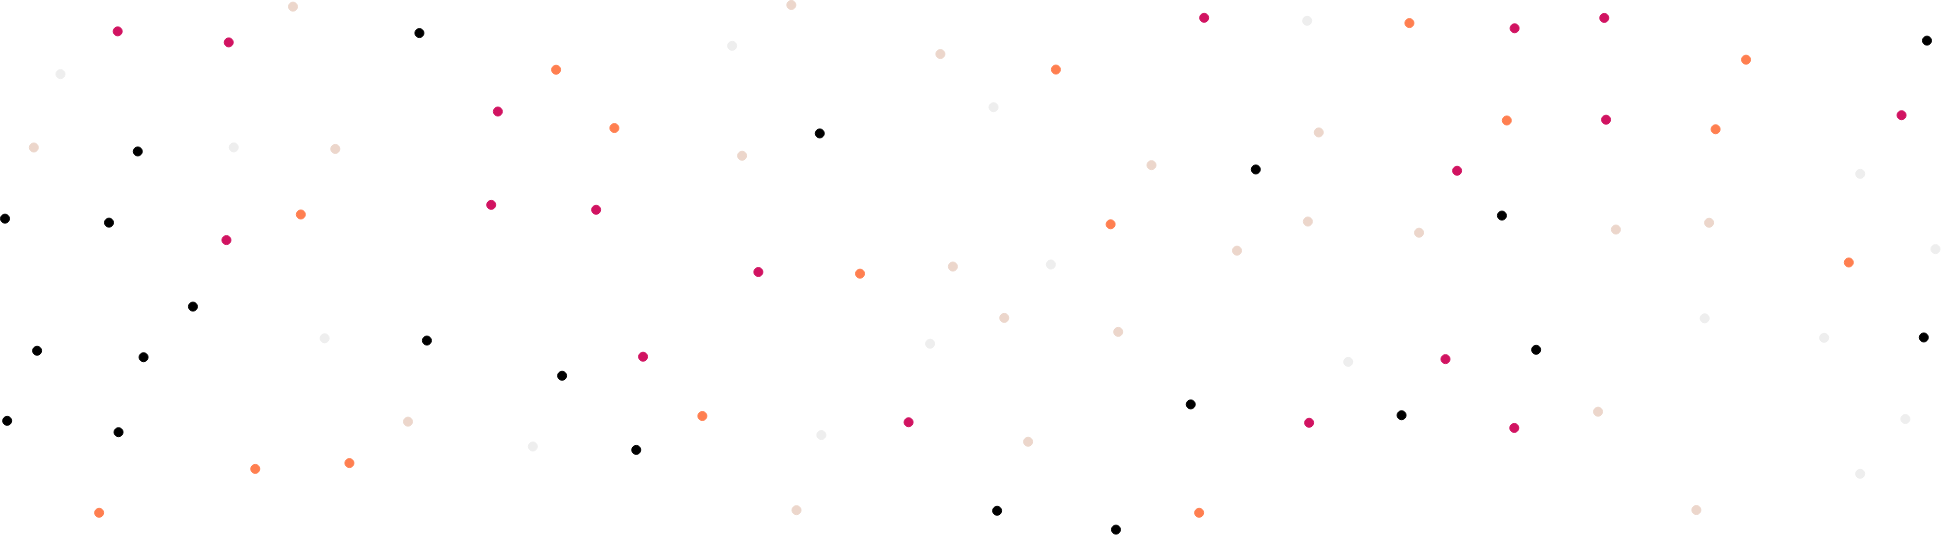 pink white black and orange dots